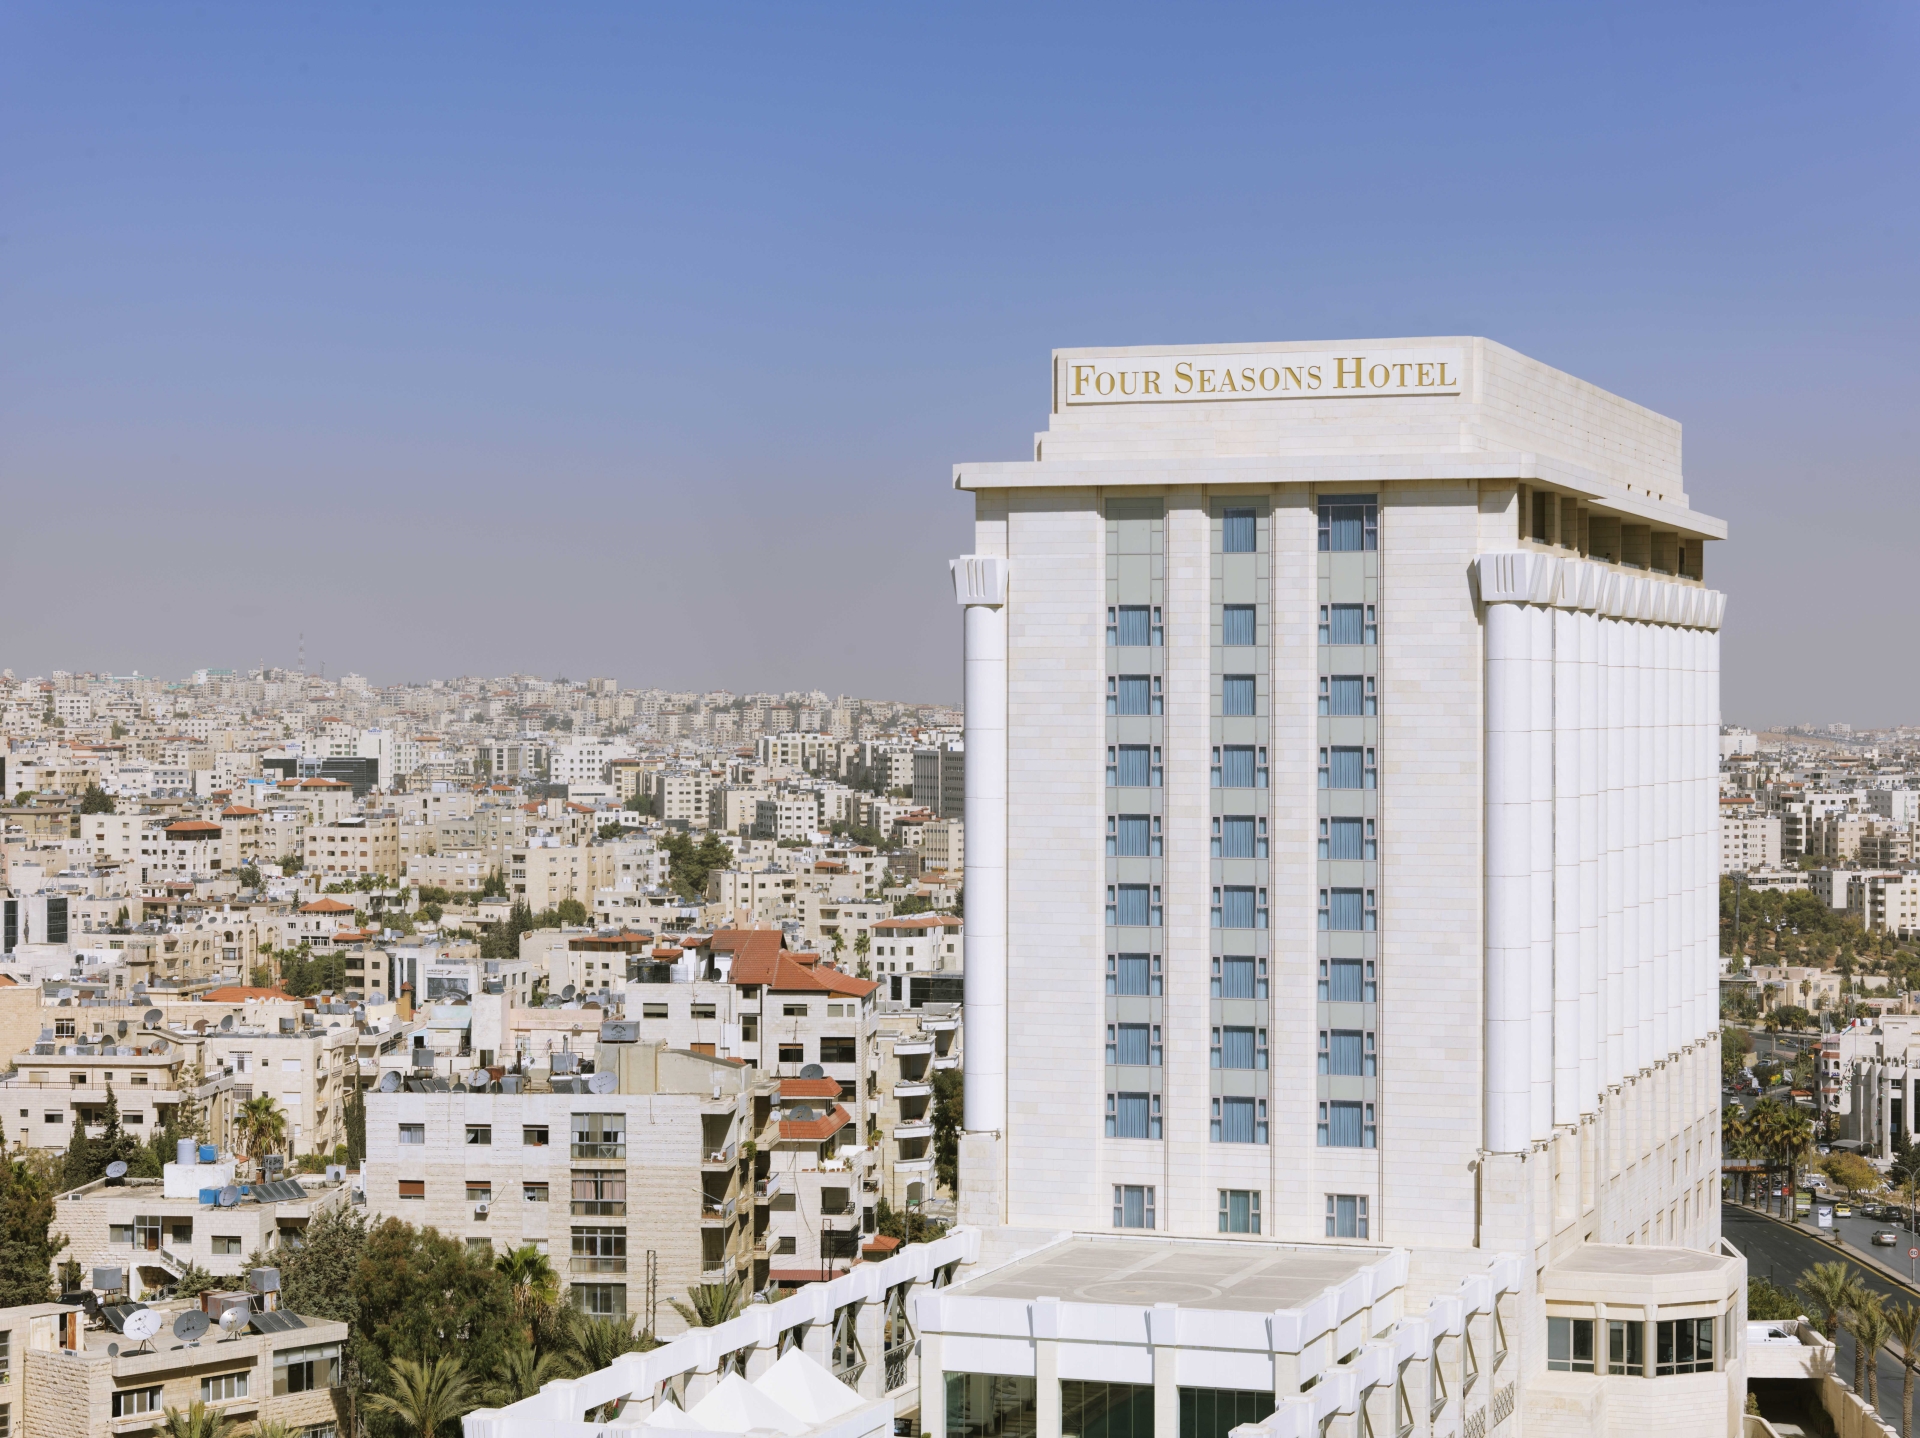 Hotel Exterior - The Four Seasons Amman